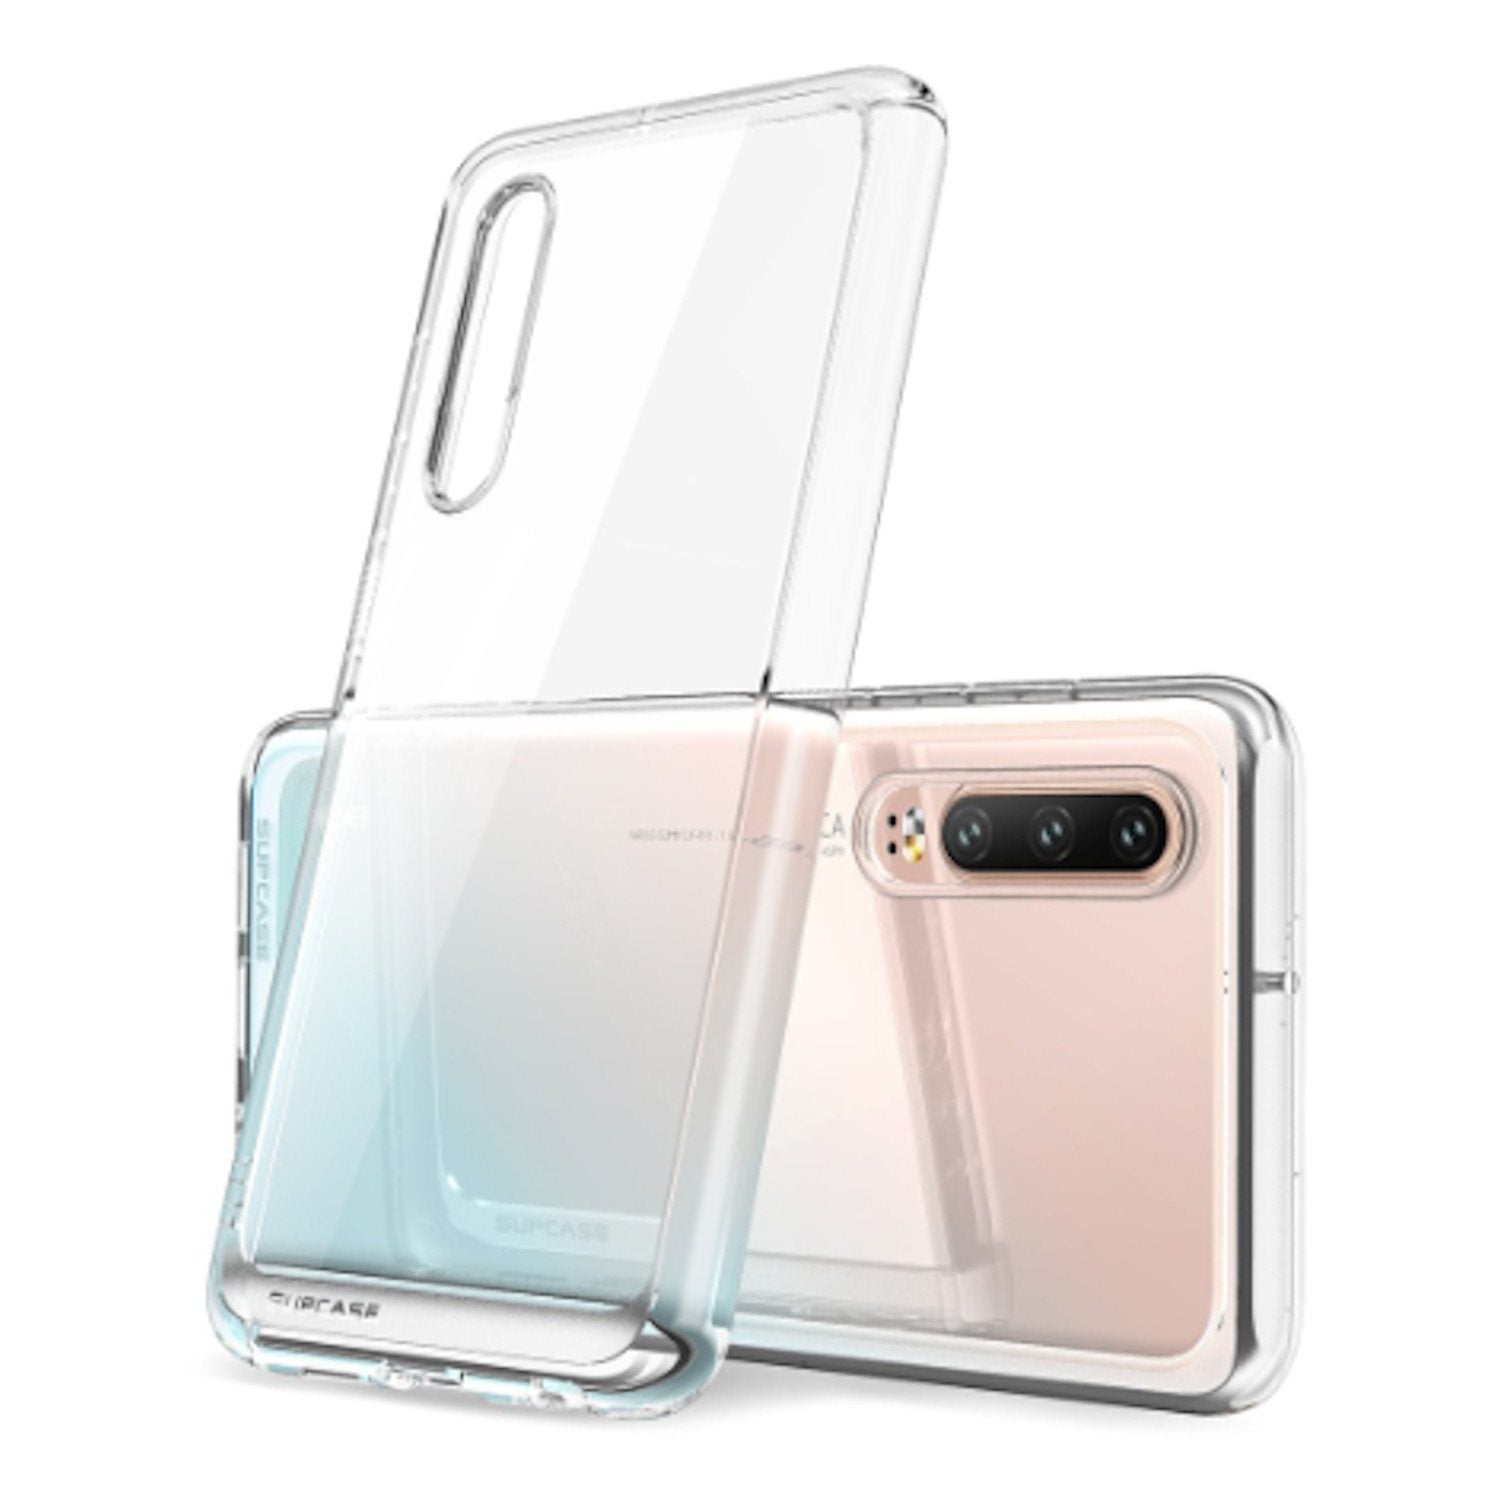 Supcase UB Style Series Hybrid Protective Clear Case for Huawei P30, Clear Huawei Case Supcase 